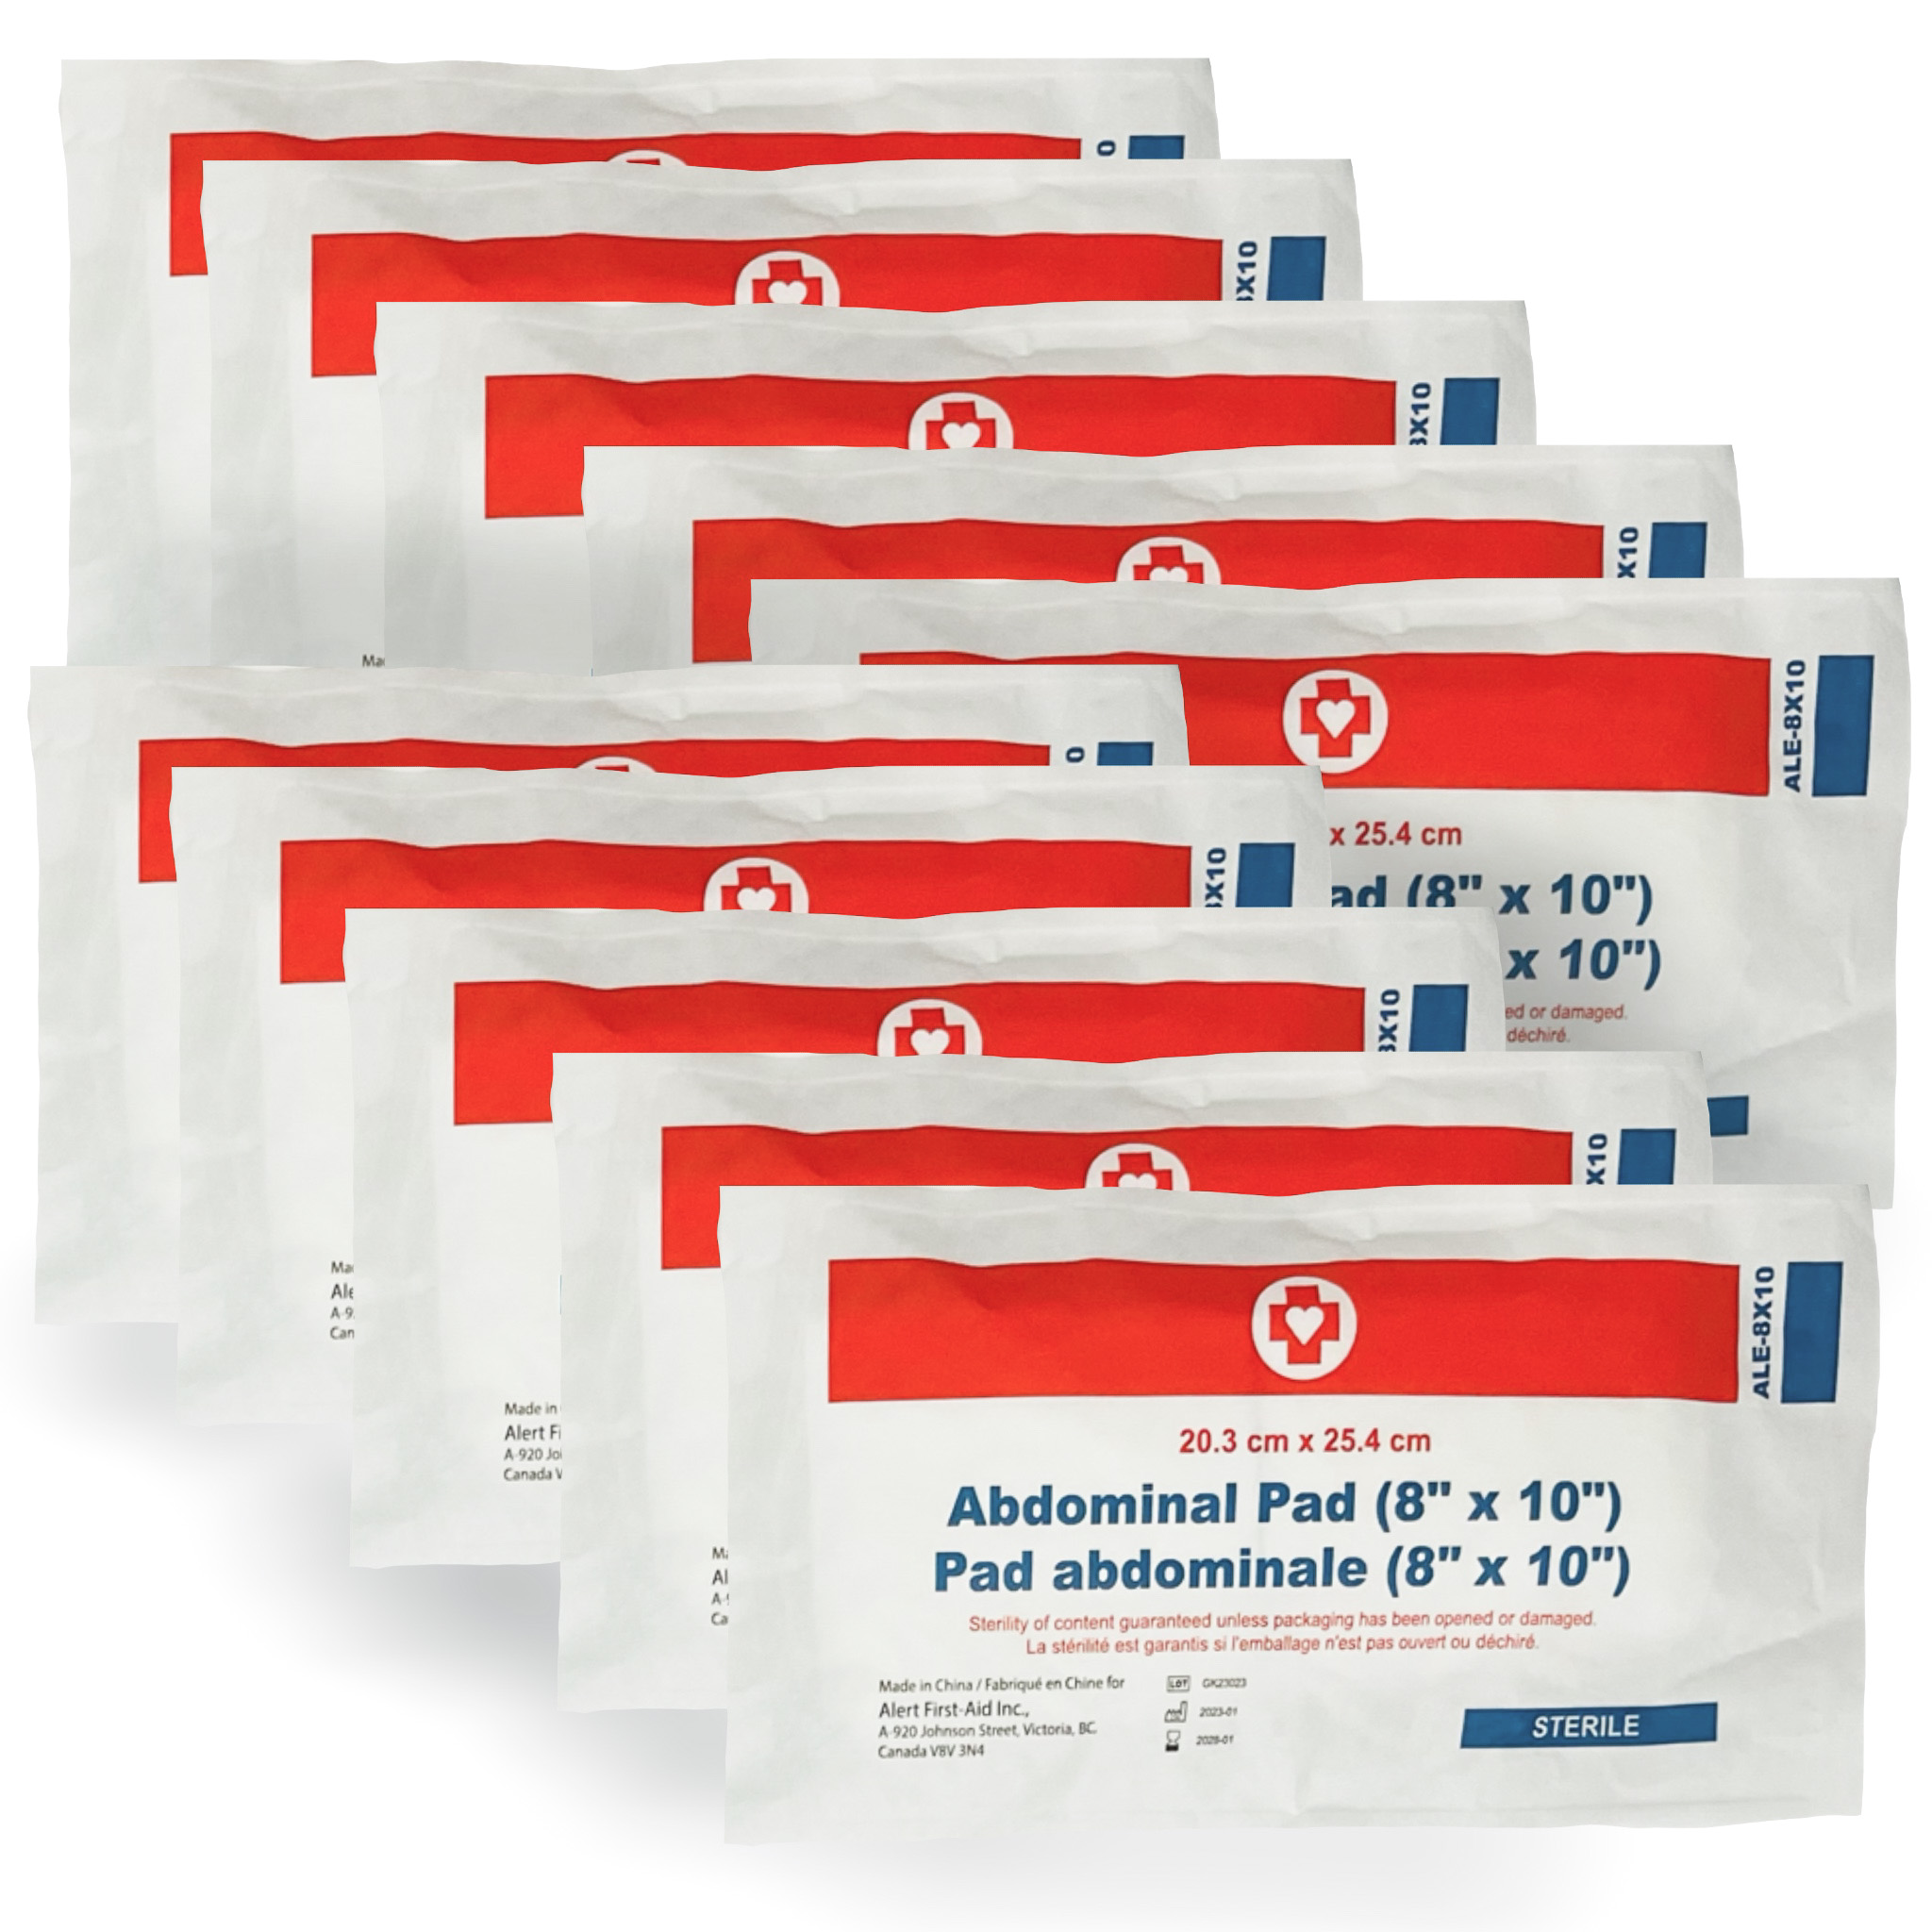 8" x 10" Sterile Abdominal Pad - Bag of 10